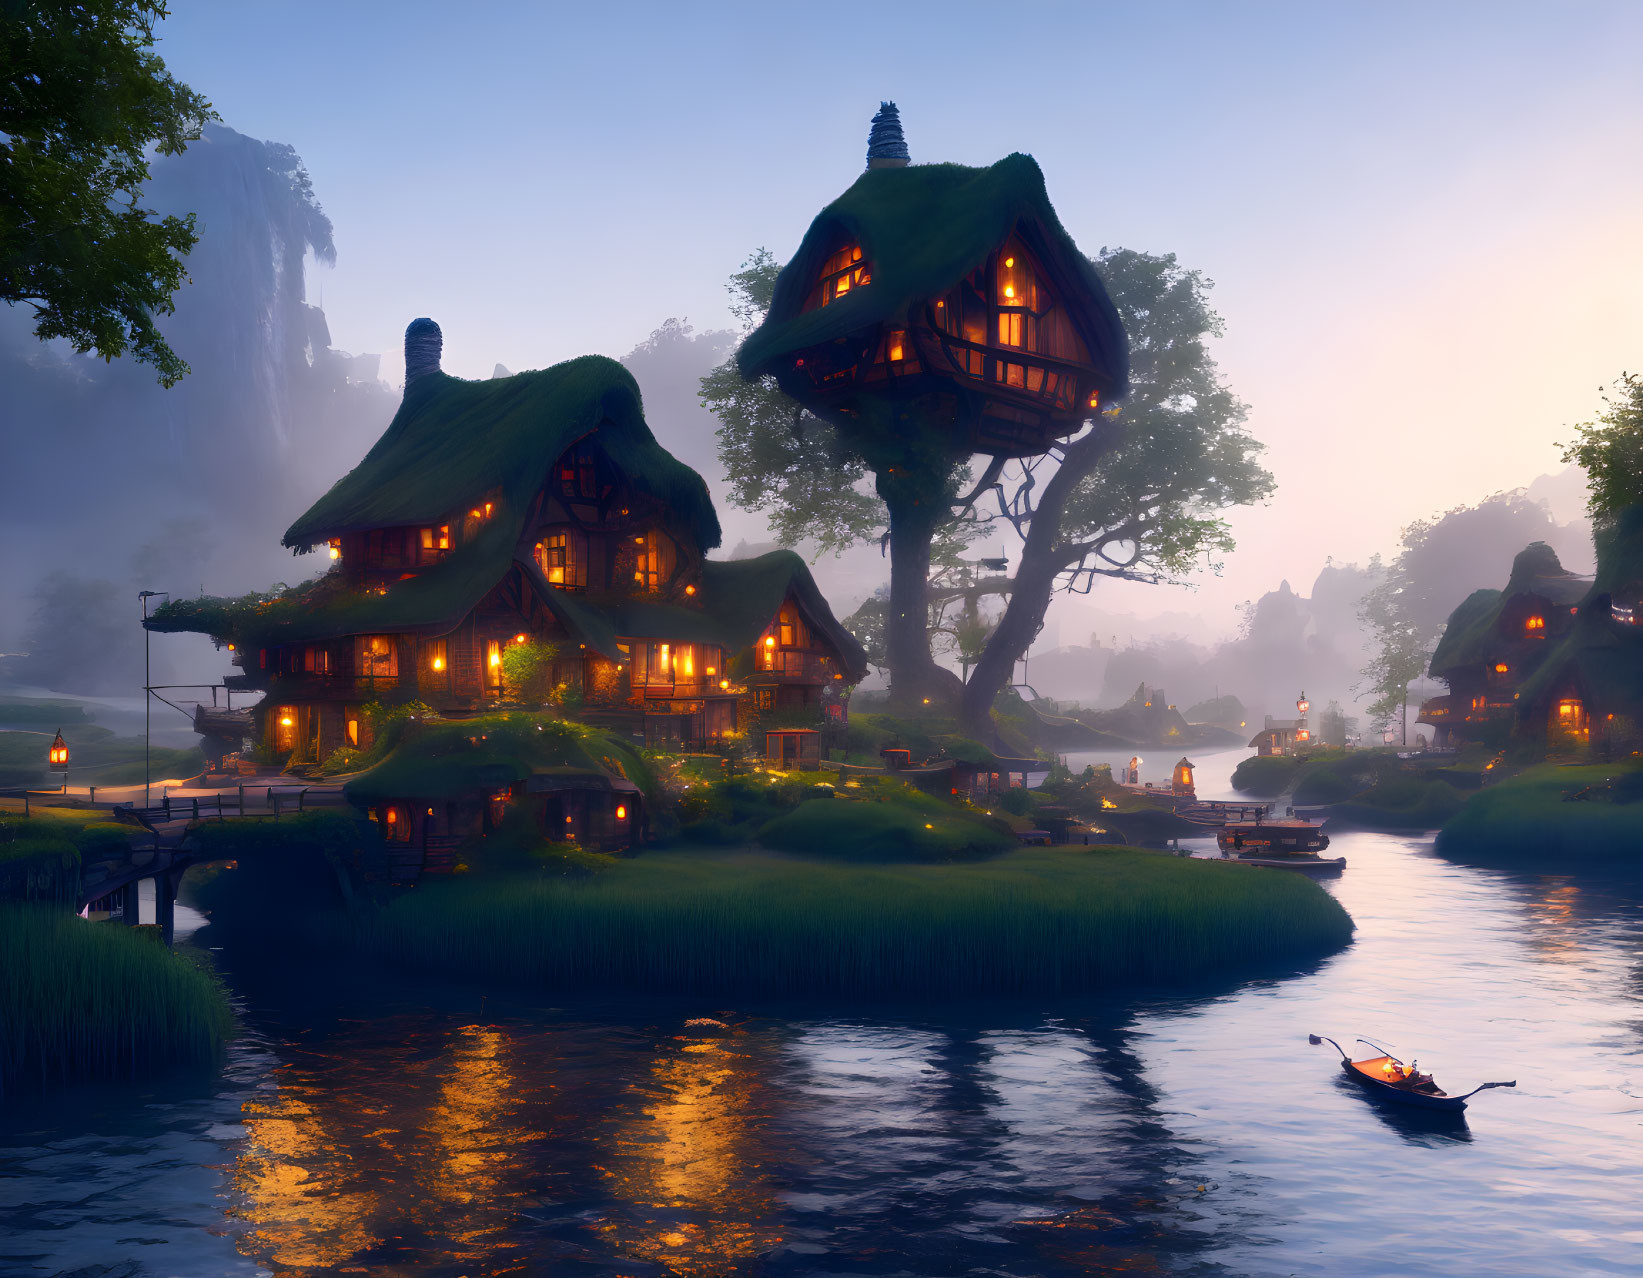 Tranquil fantasy village at twilight by serene river